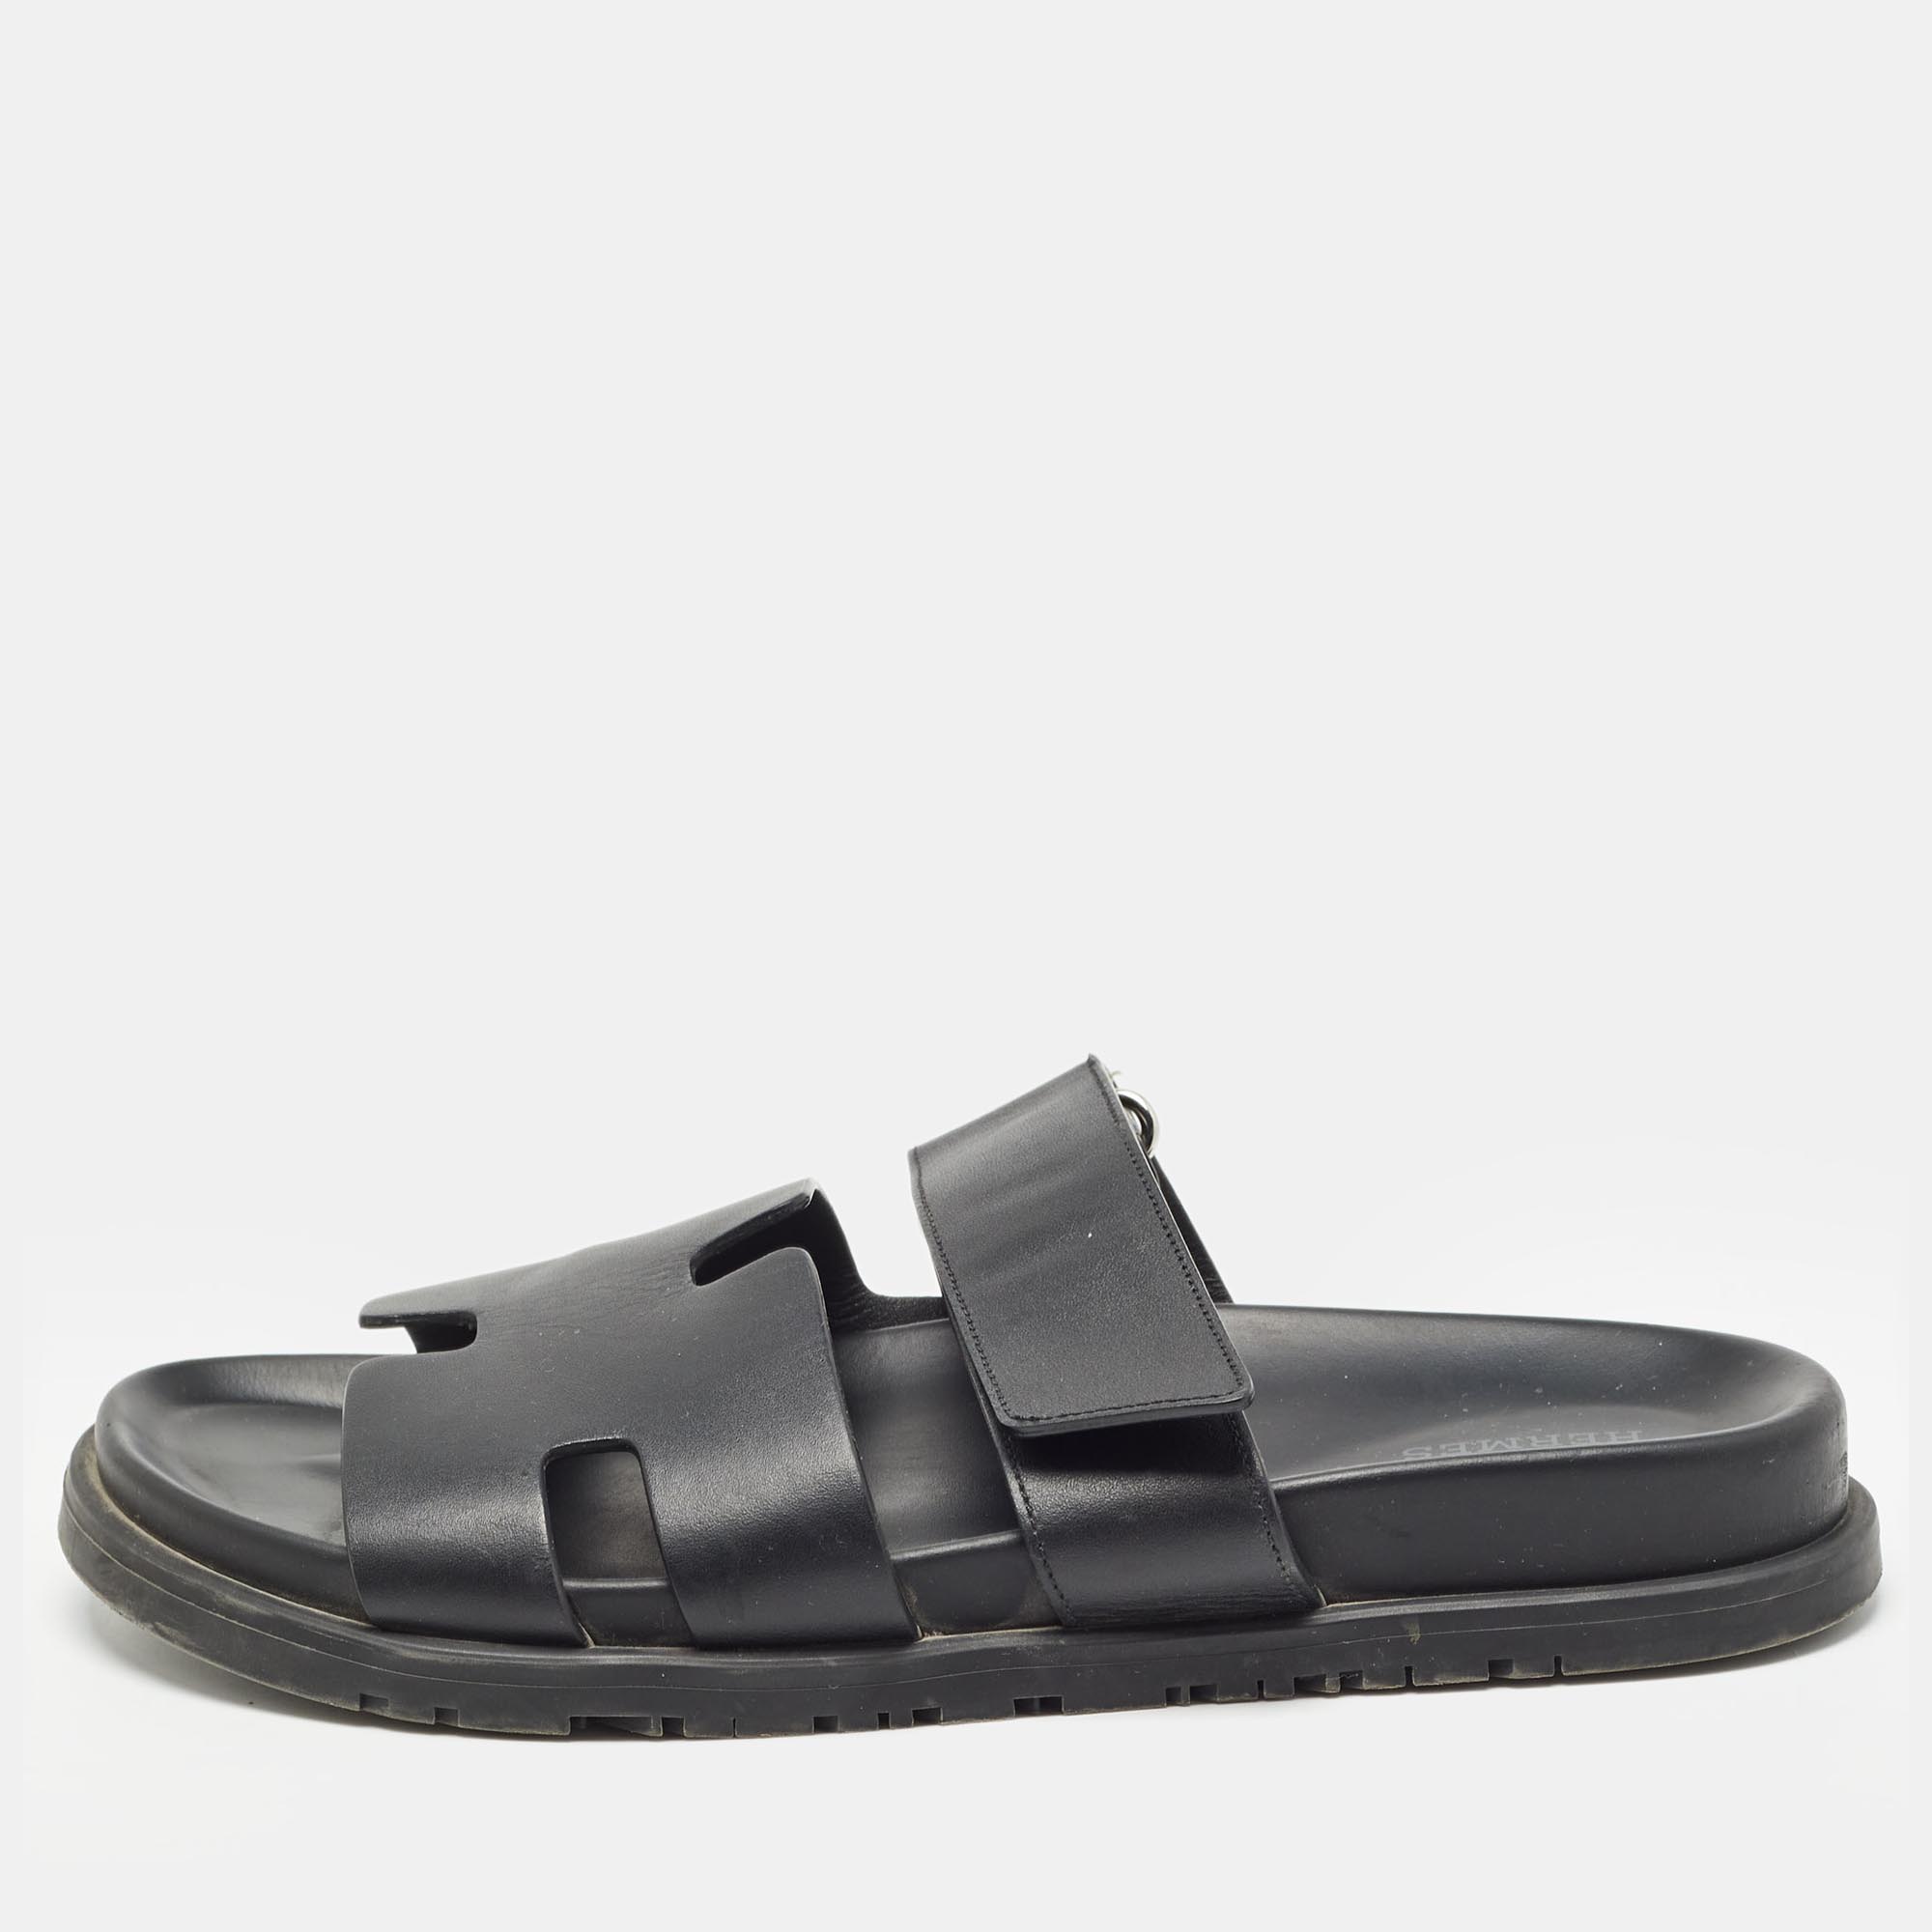 Hermes black leather chypre sandals size 39